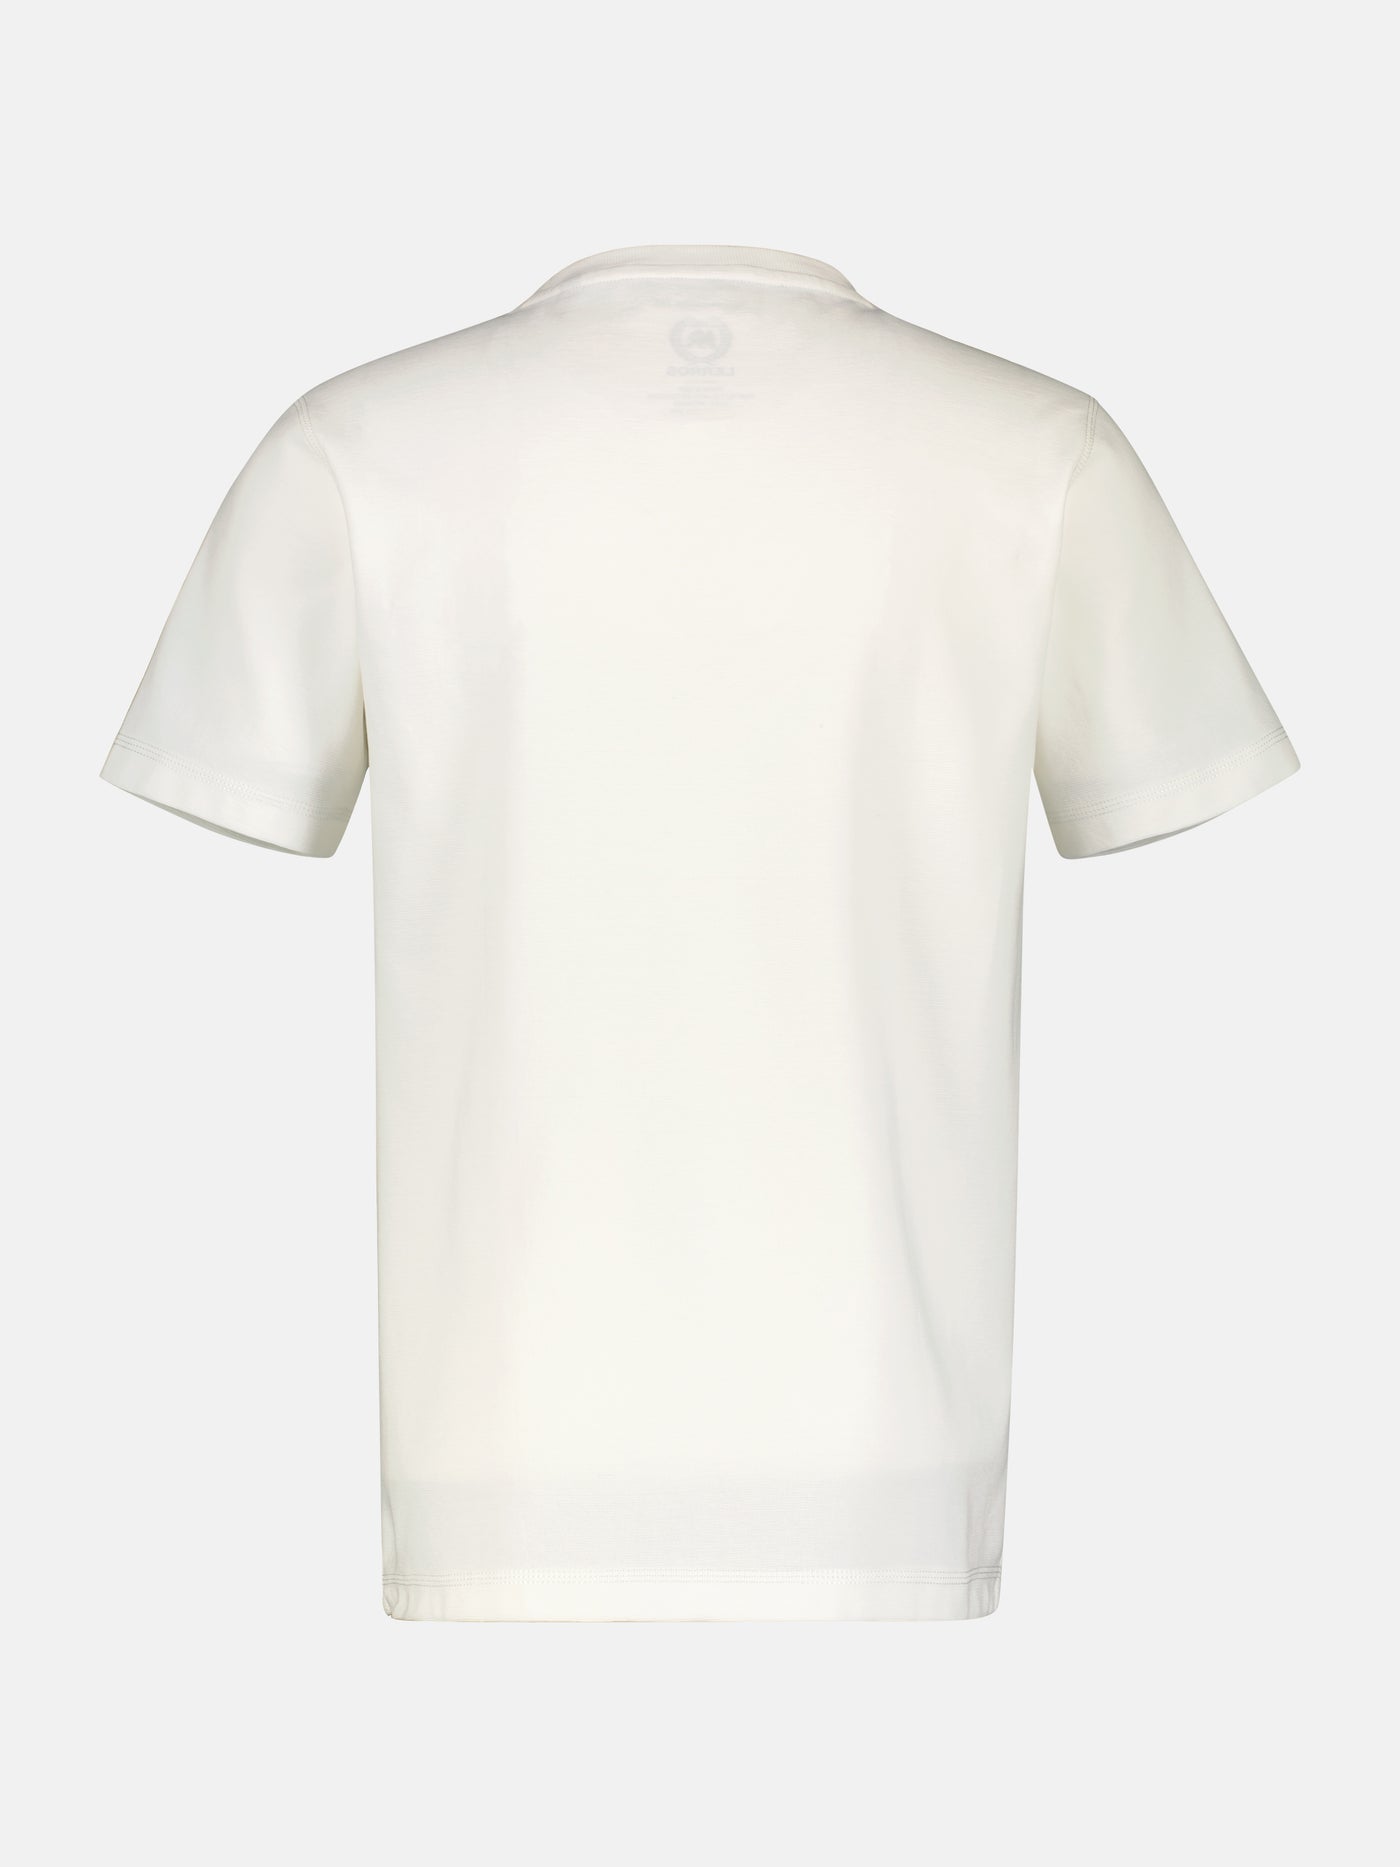 T-Shirt in Cool & Dry Qualität, unifarben